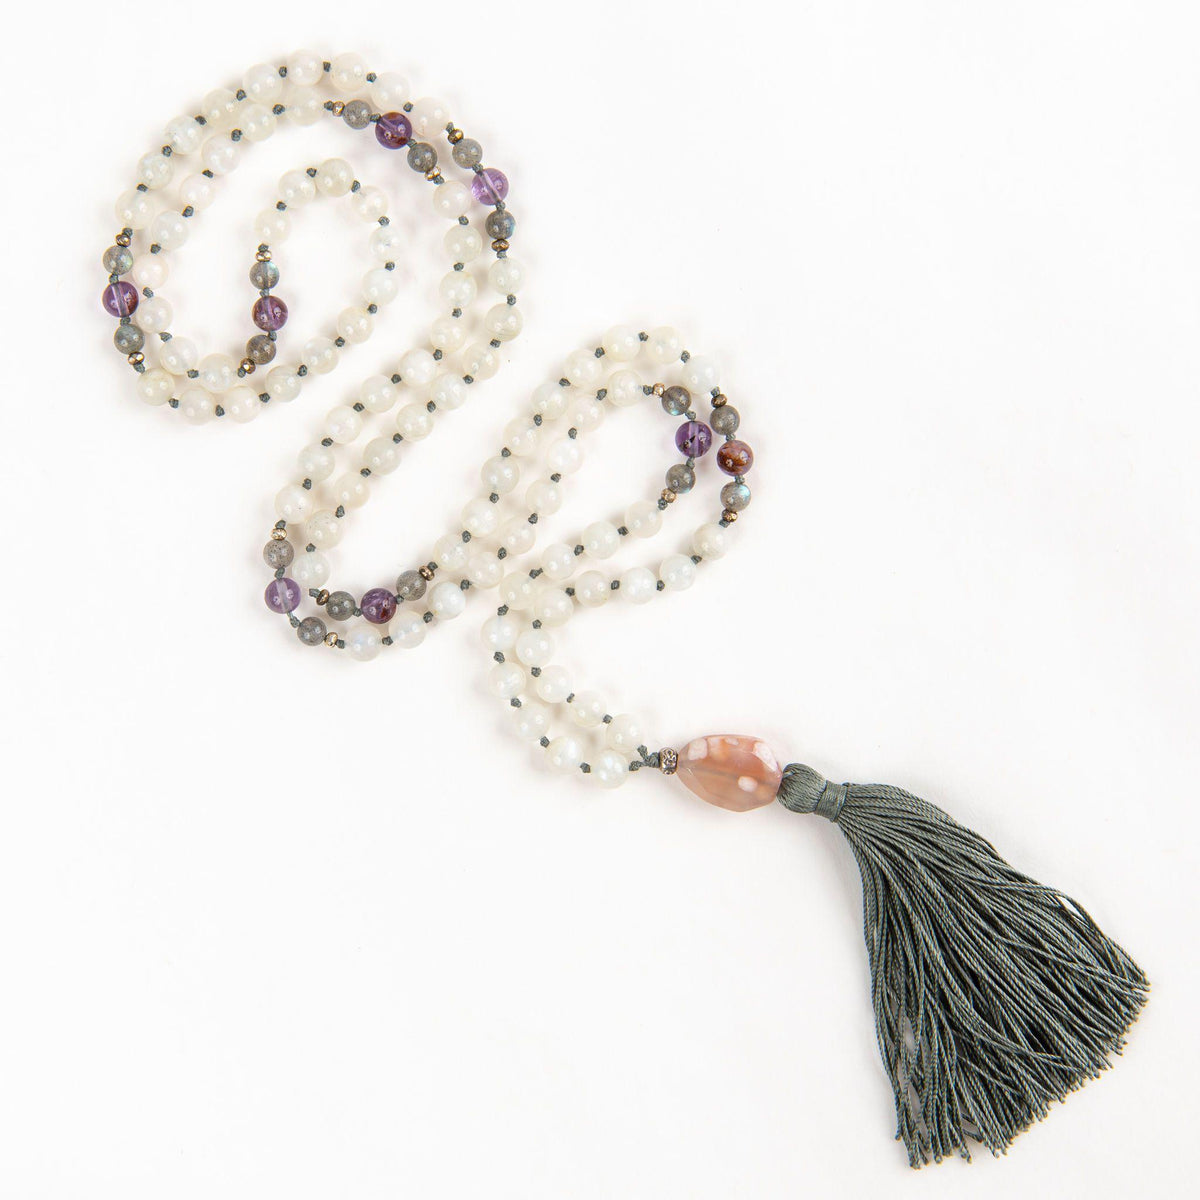 White Mala Beads with Super Seven Gemstone Necklace Merakalpa Malas